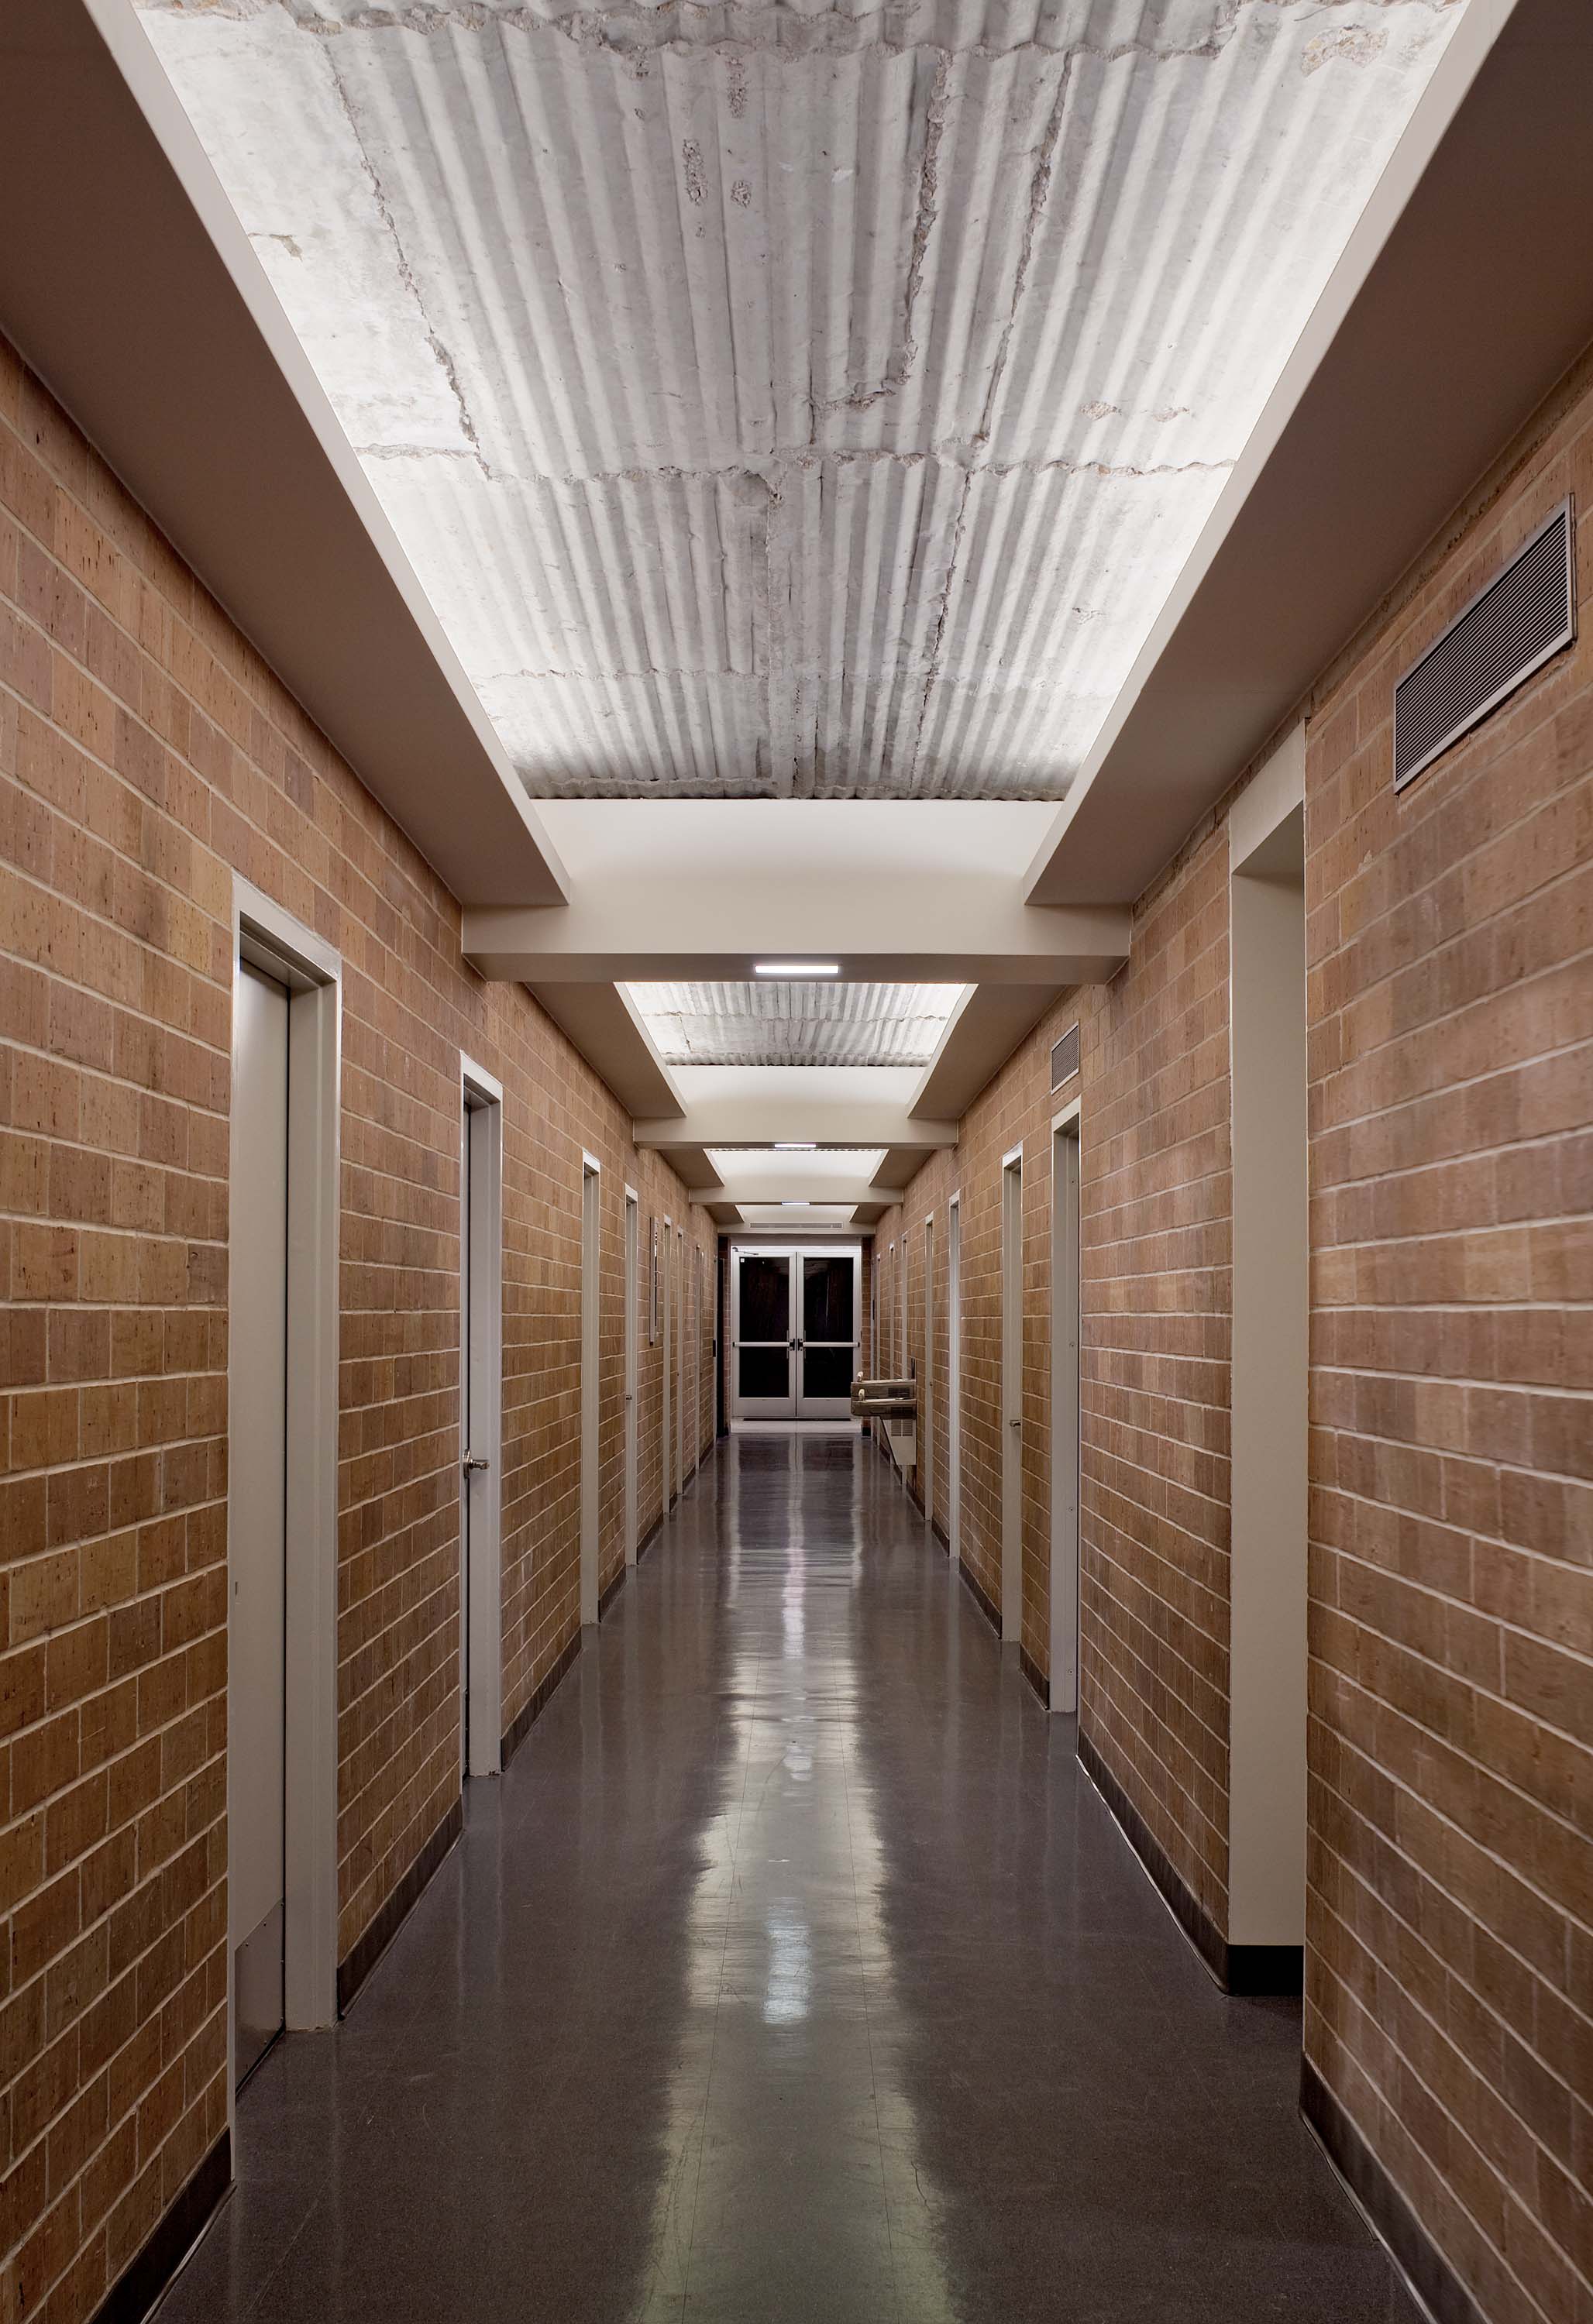 Interior brick-lined hallway of Doyle Hall by Specht Novak Architects. Shot by Taggart Sorensen.